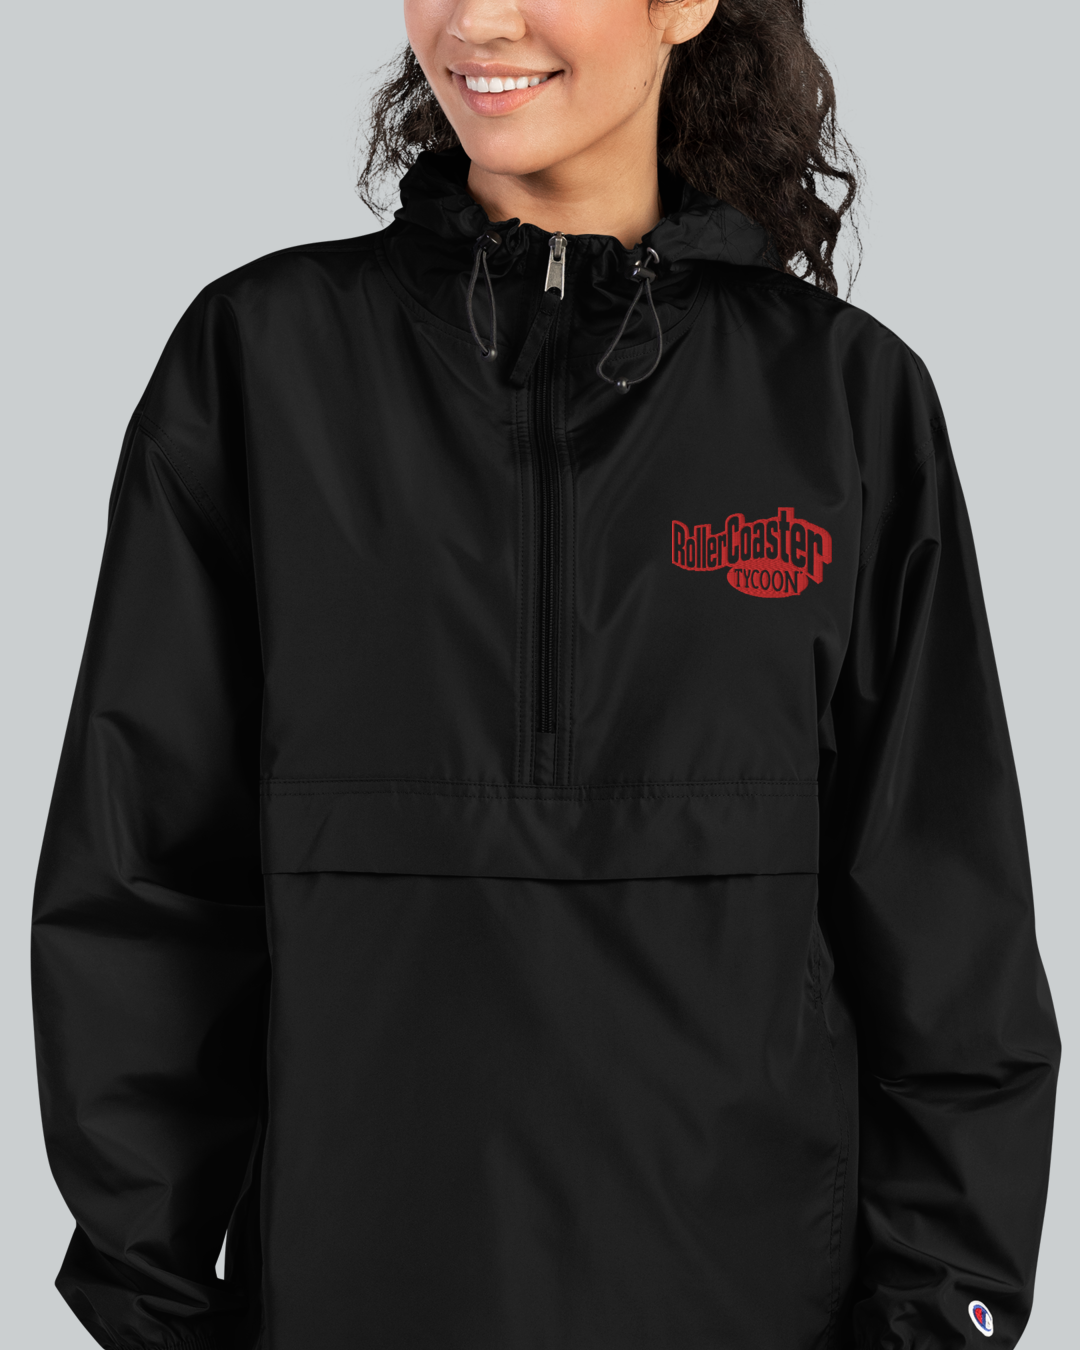 RollerCoaster Tycoon 25th Anniversary Windbreaker Jacket in black with logo on breast